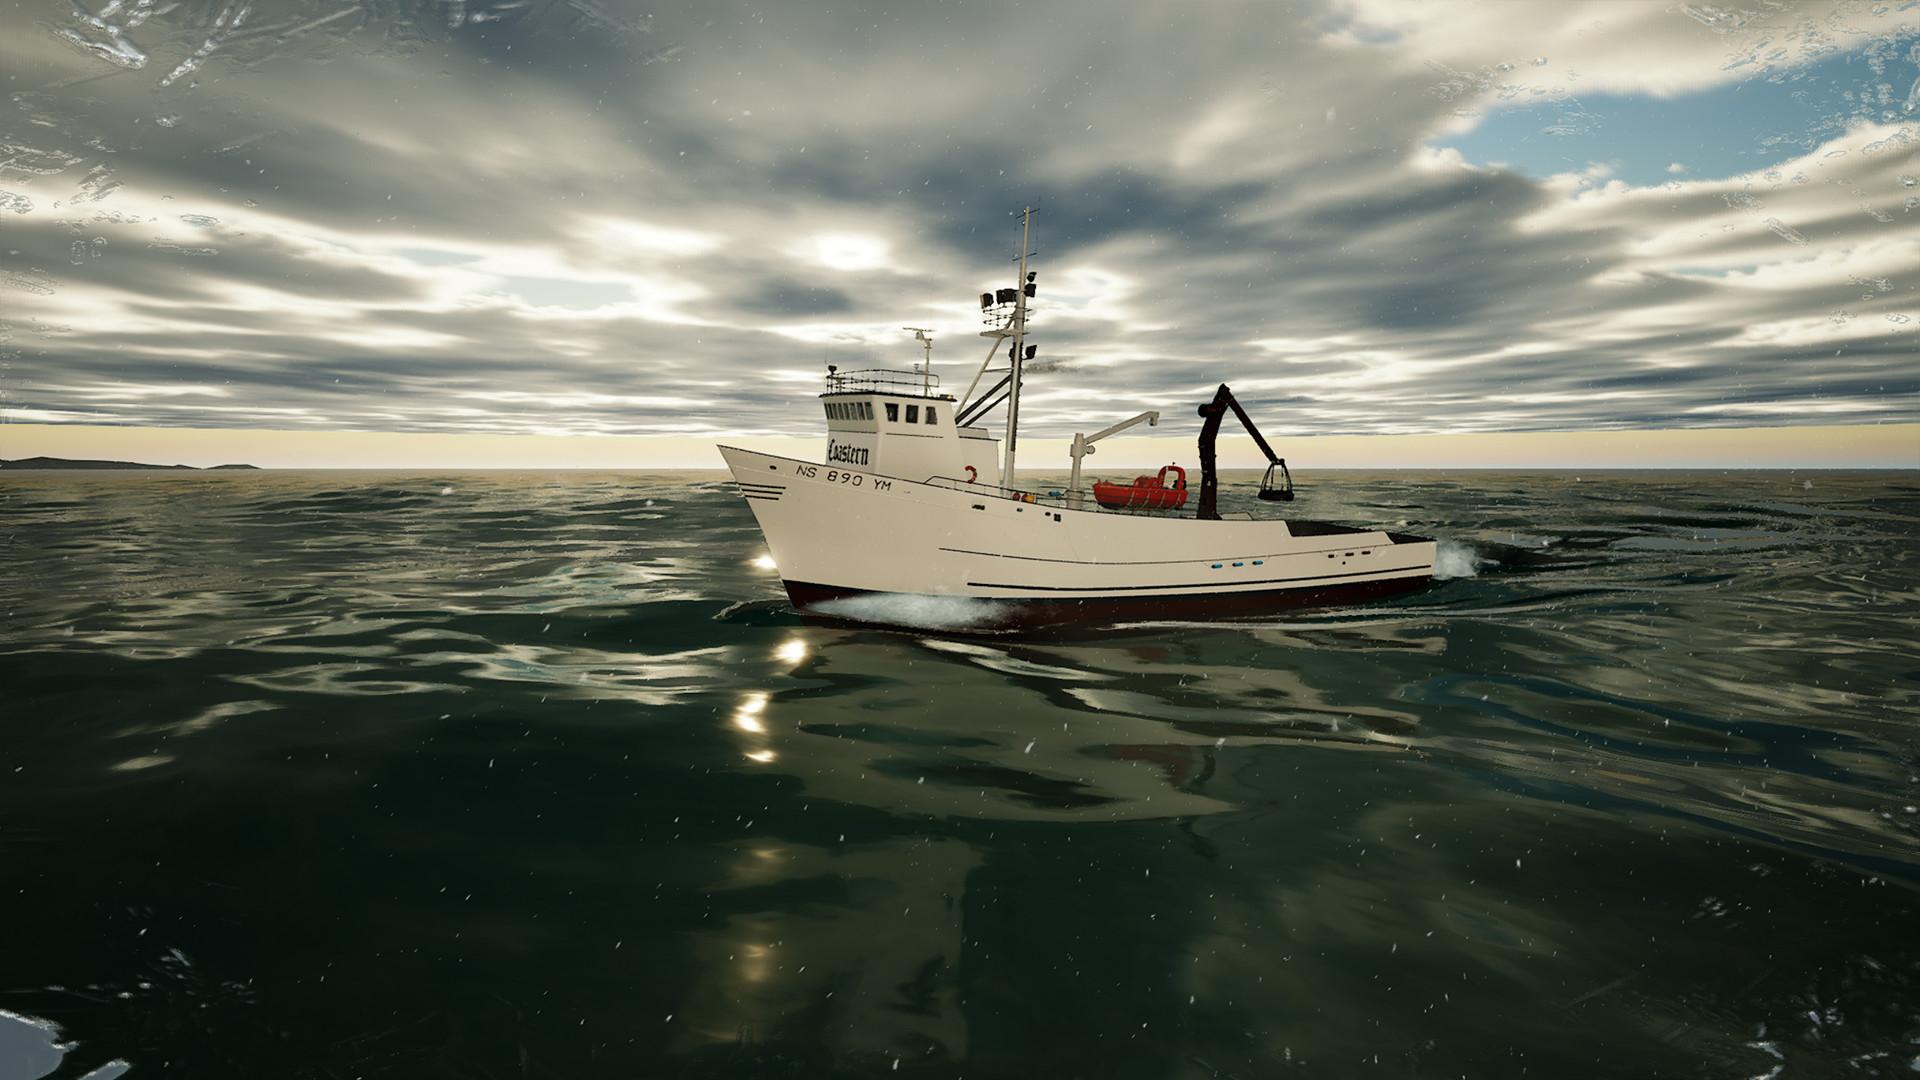 Screenshot №4 from game Fishing: North Atlantic - Enhanced Edition